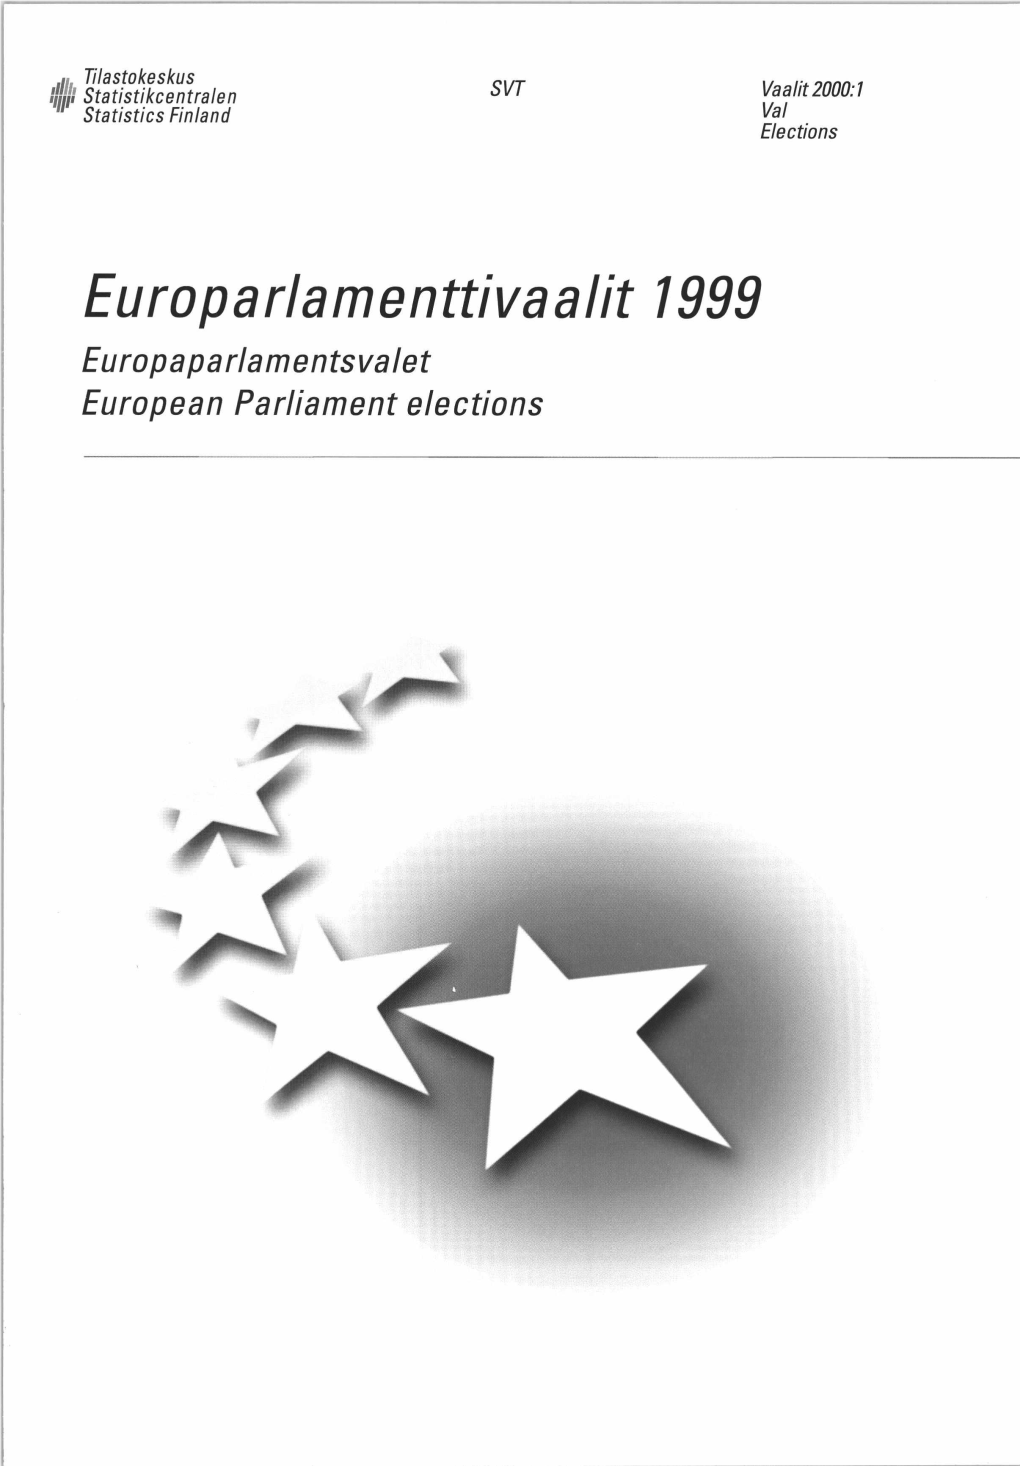 Europarlamenttivaalit 1999 Europa Parlamentsvalet European Parliament Elections Vaalit 2000:1 Val Elections